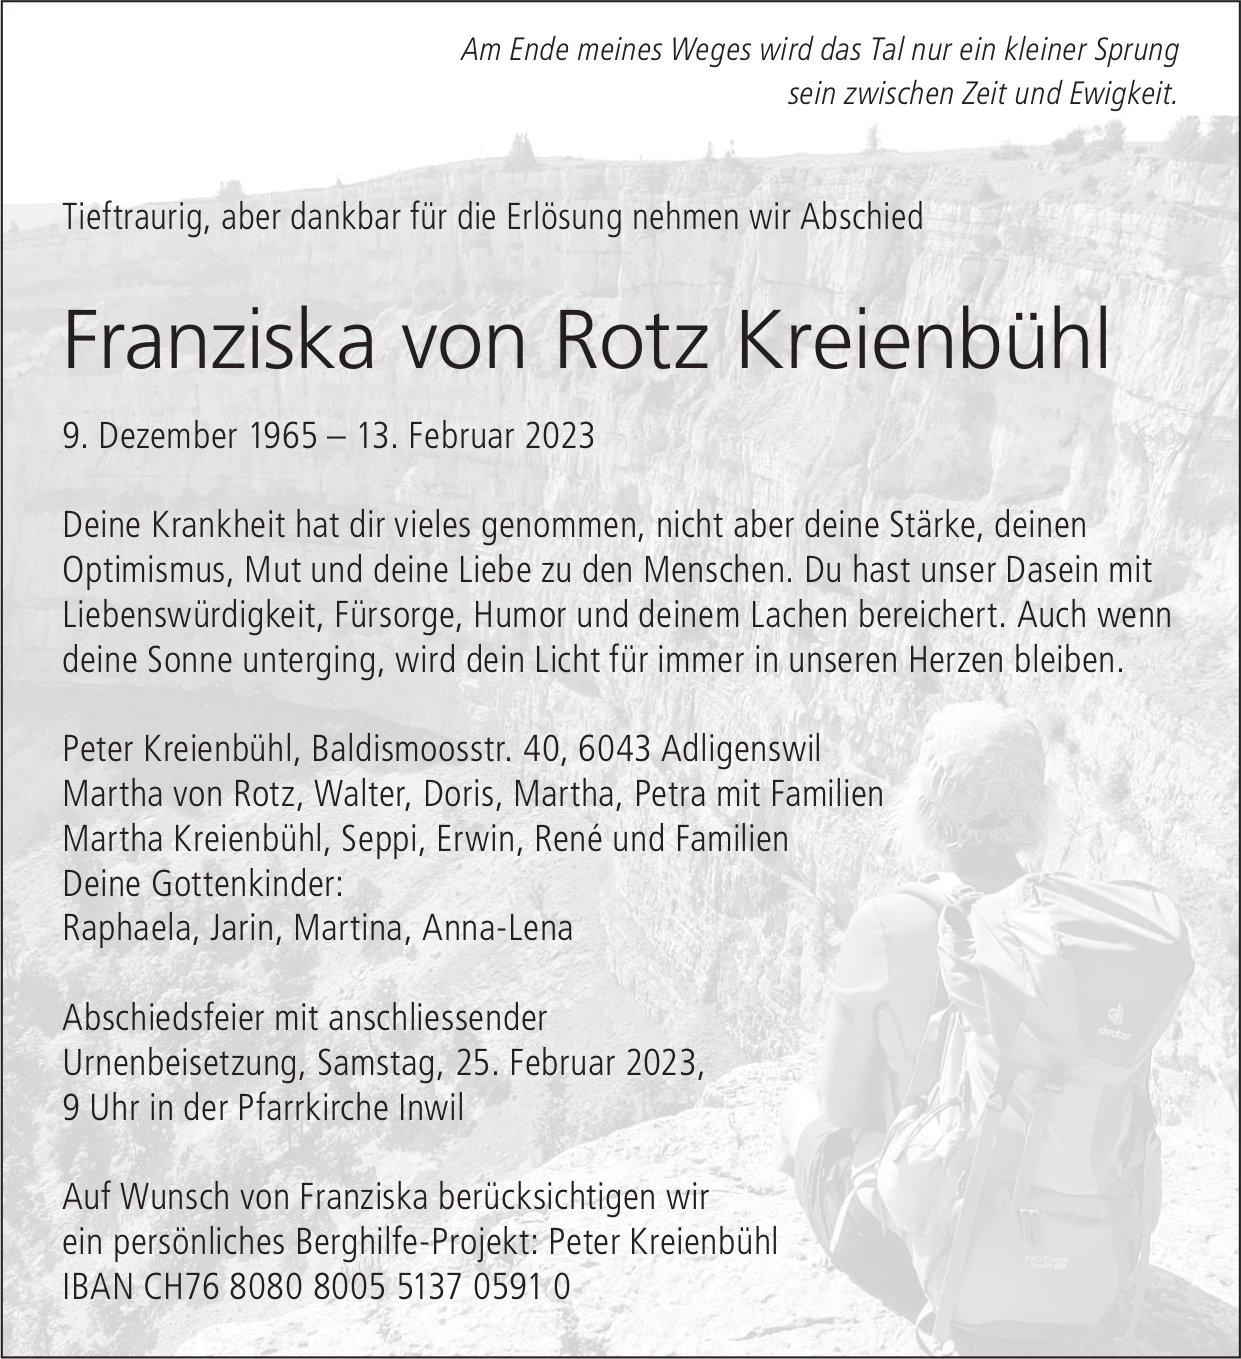 Von Rotz Kreienbühl Franziska, Februar 2023 / TA